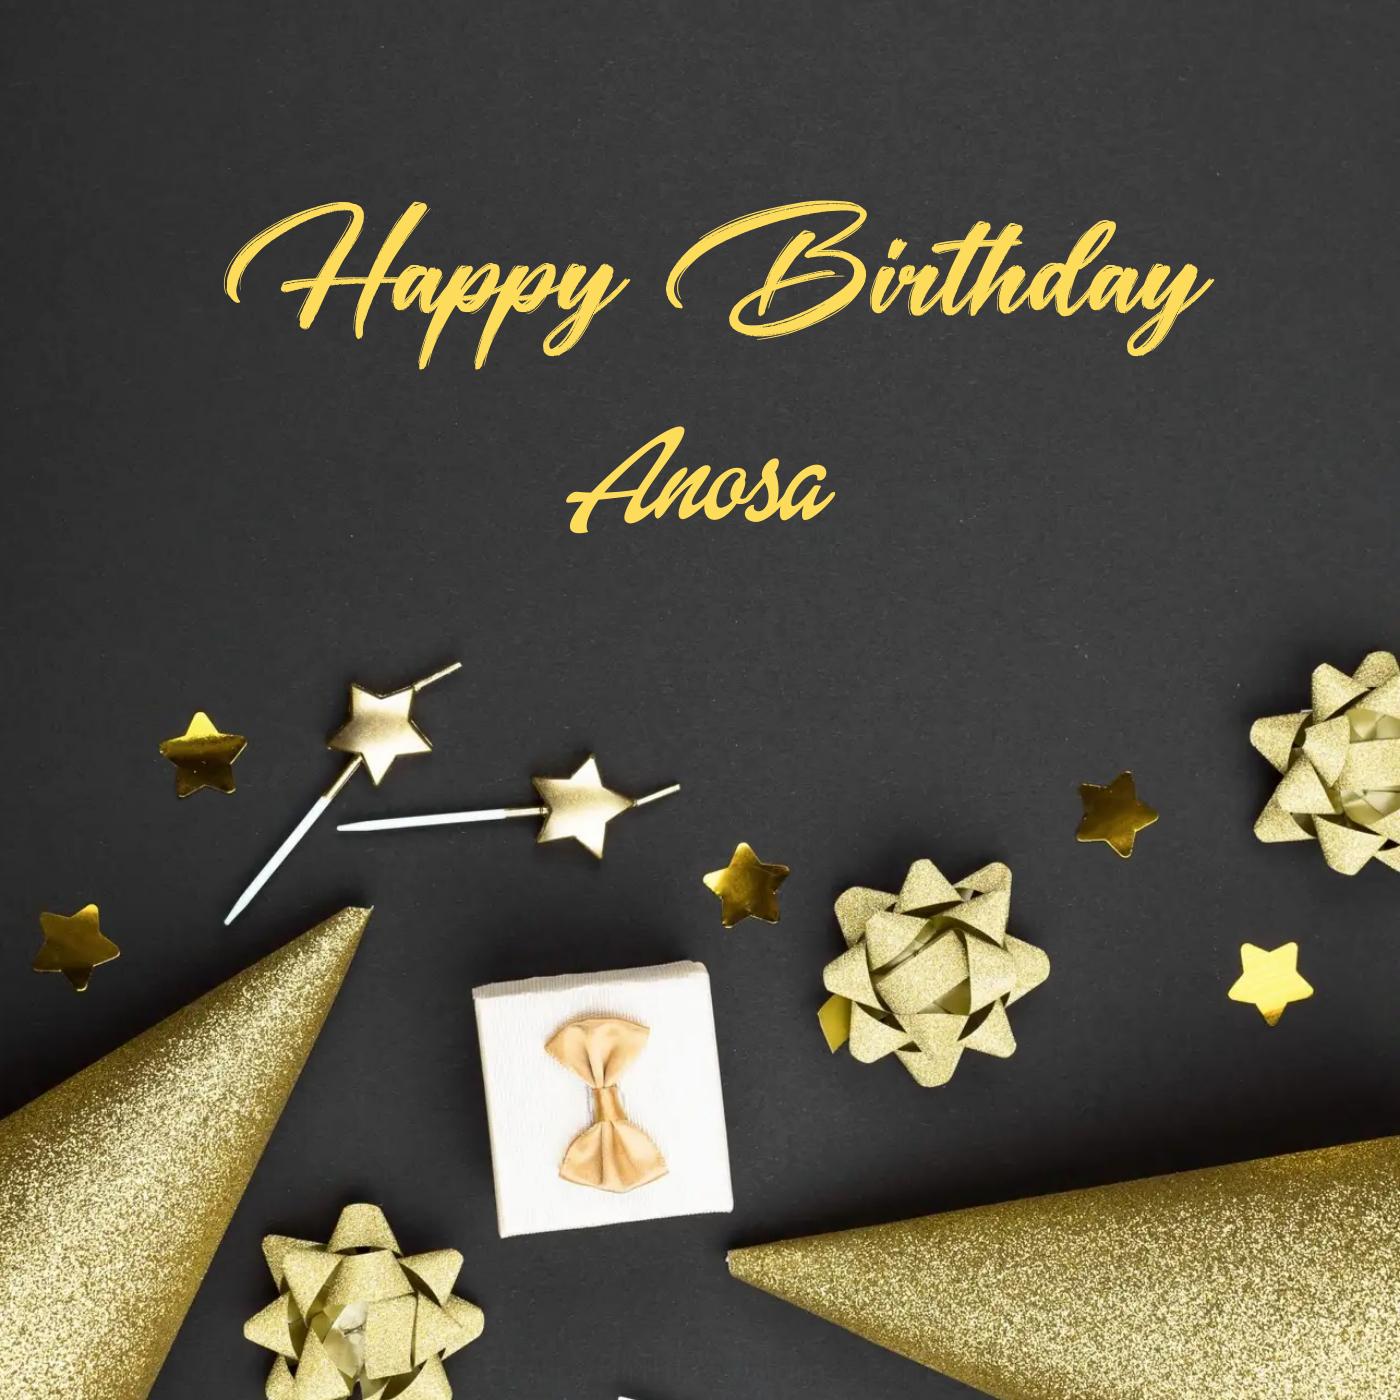 Happy Birthday Anosa Golden Theme Card